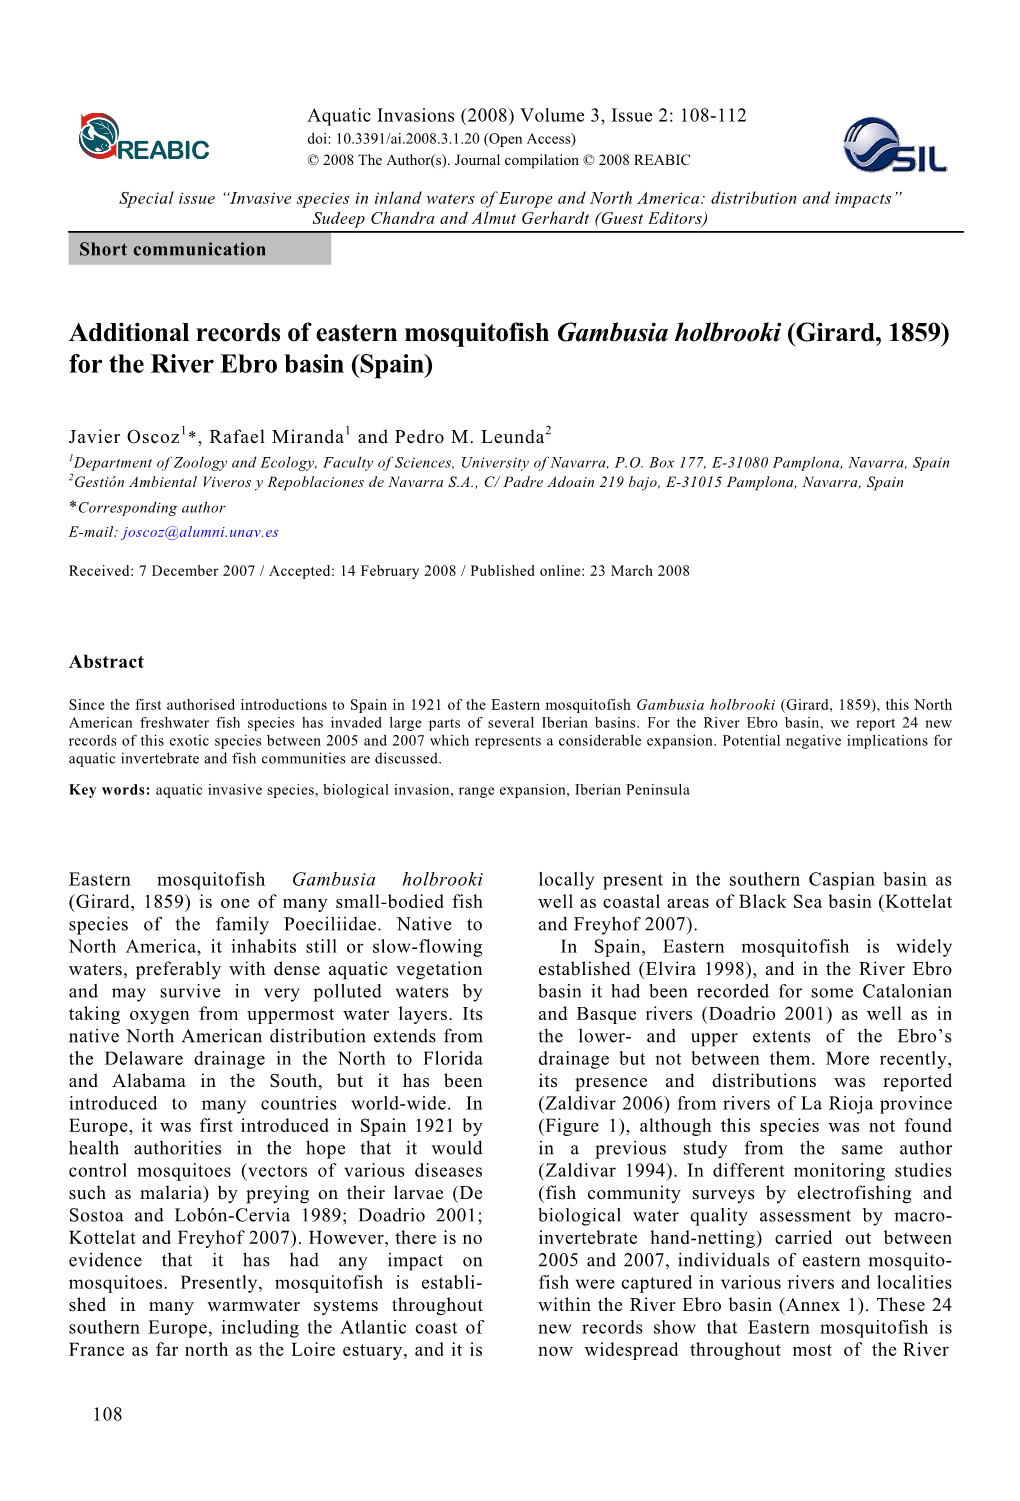 Additional Records of Eastern Mosquitofish Gambusia Holbrooki (Girard, 1859) for the River Ebro Basin (Spain)